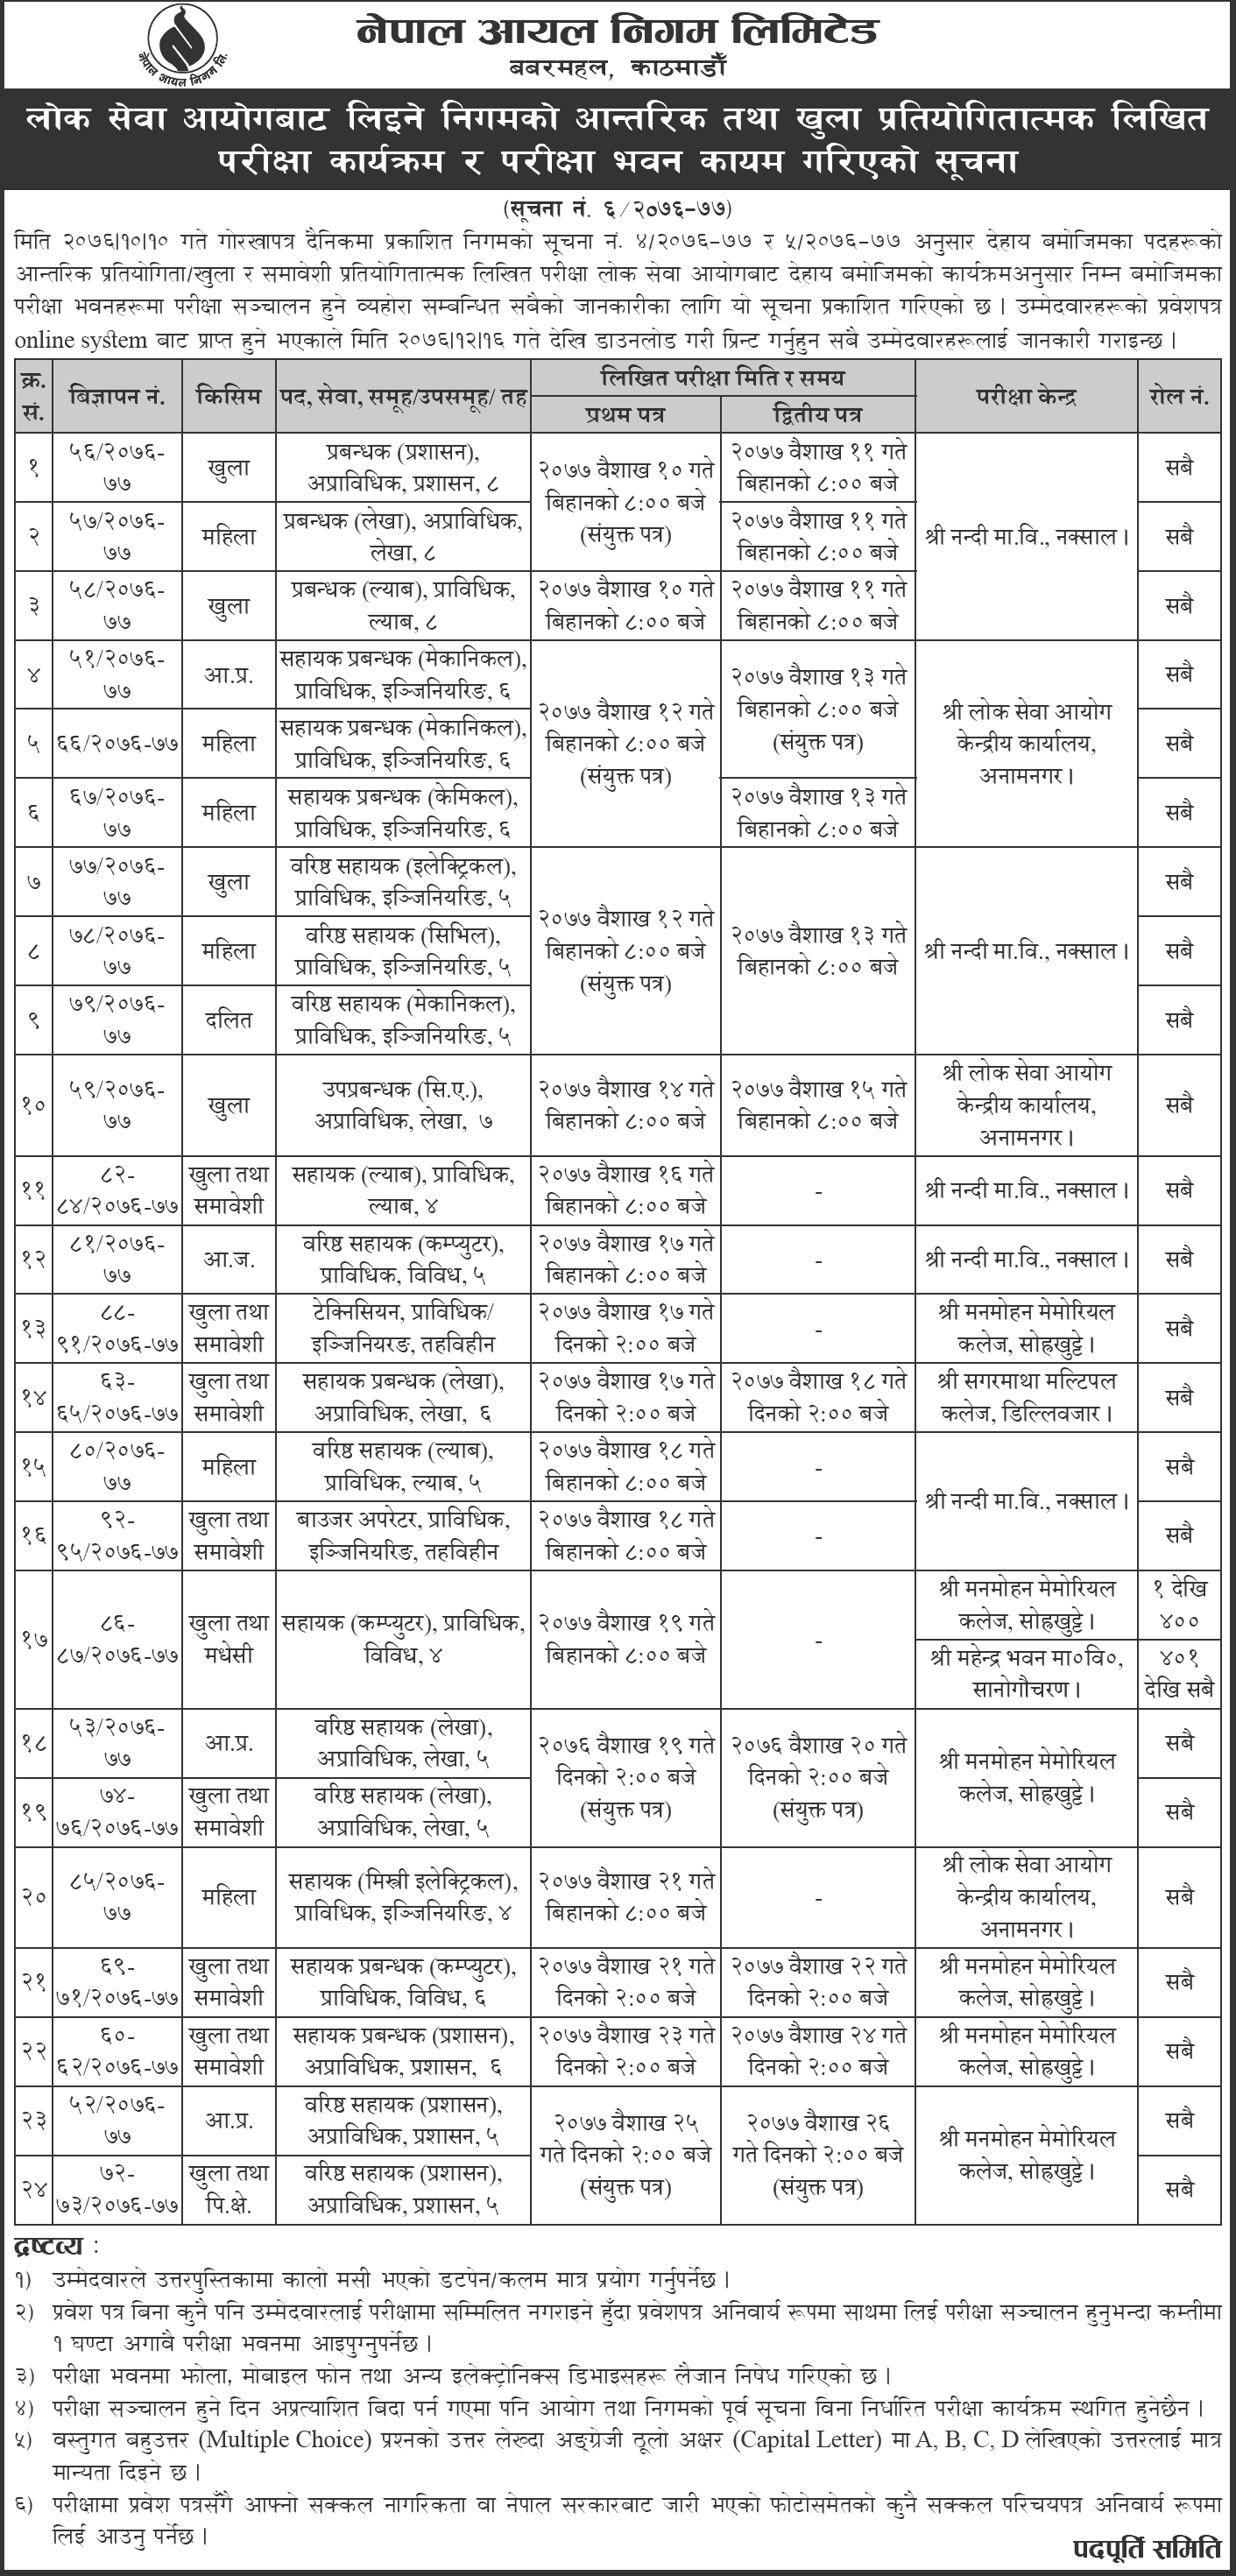 Nepal Oil Corporation Written Exam Schedule and Exam Center Notice